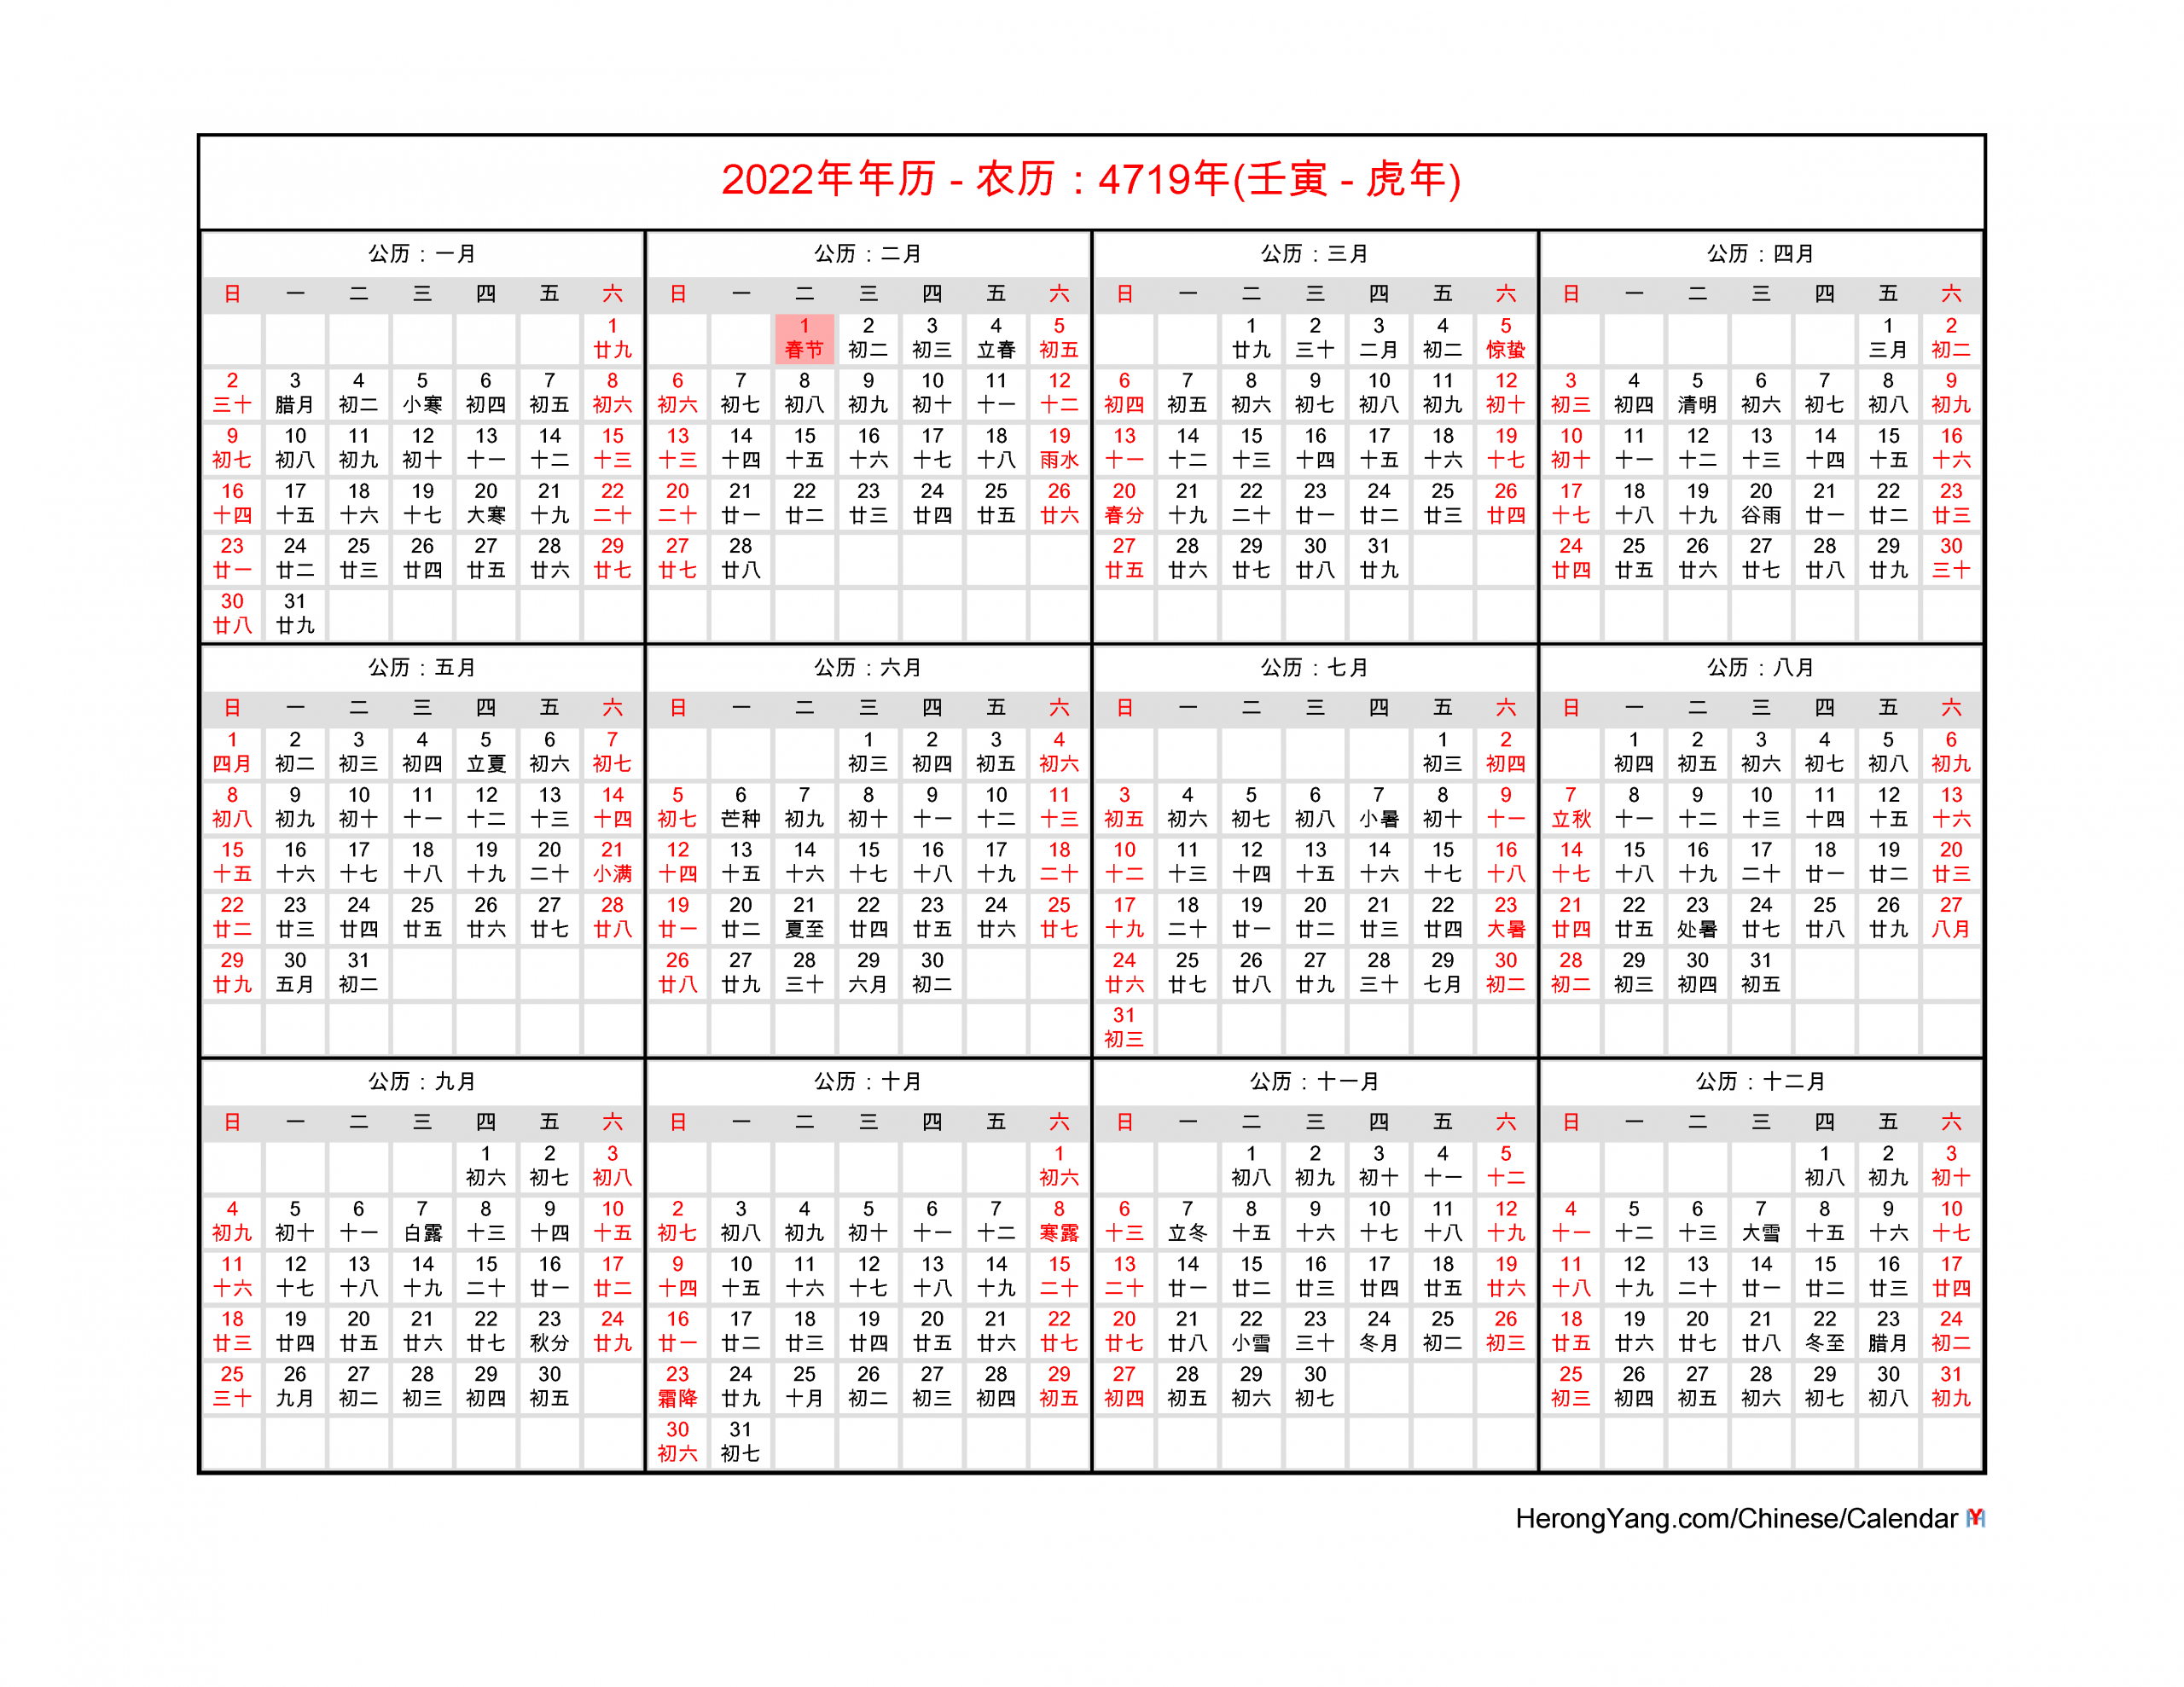 Lunar Calendar 2022 - December Calendar 2022